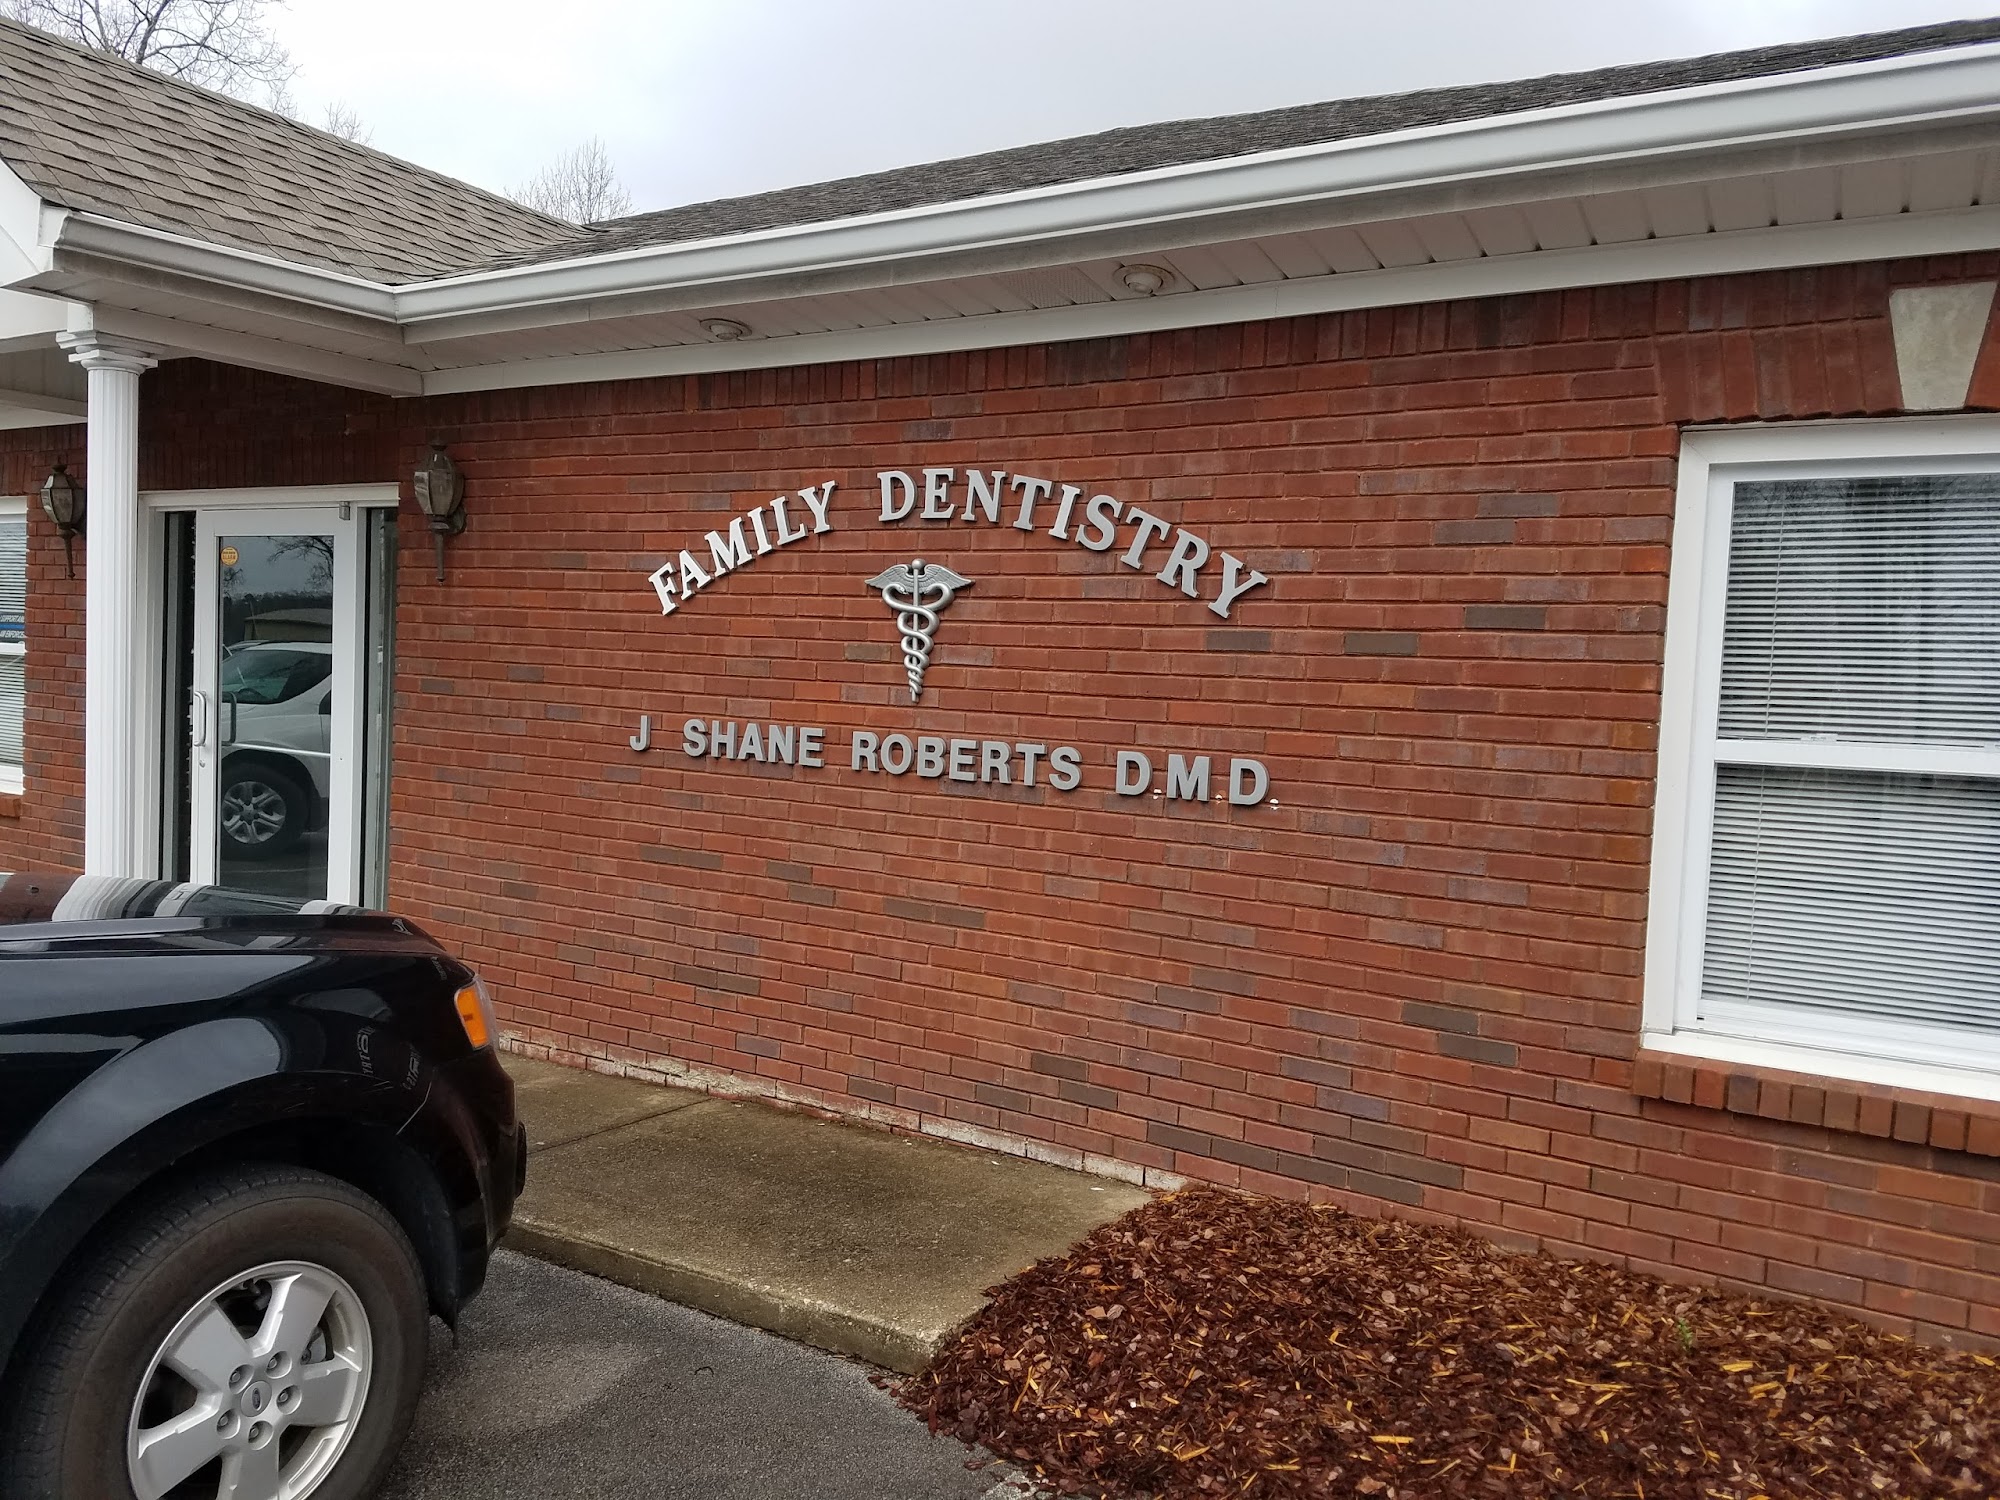 J Shane Roberts Family Dentistry